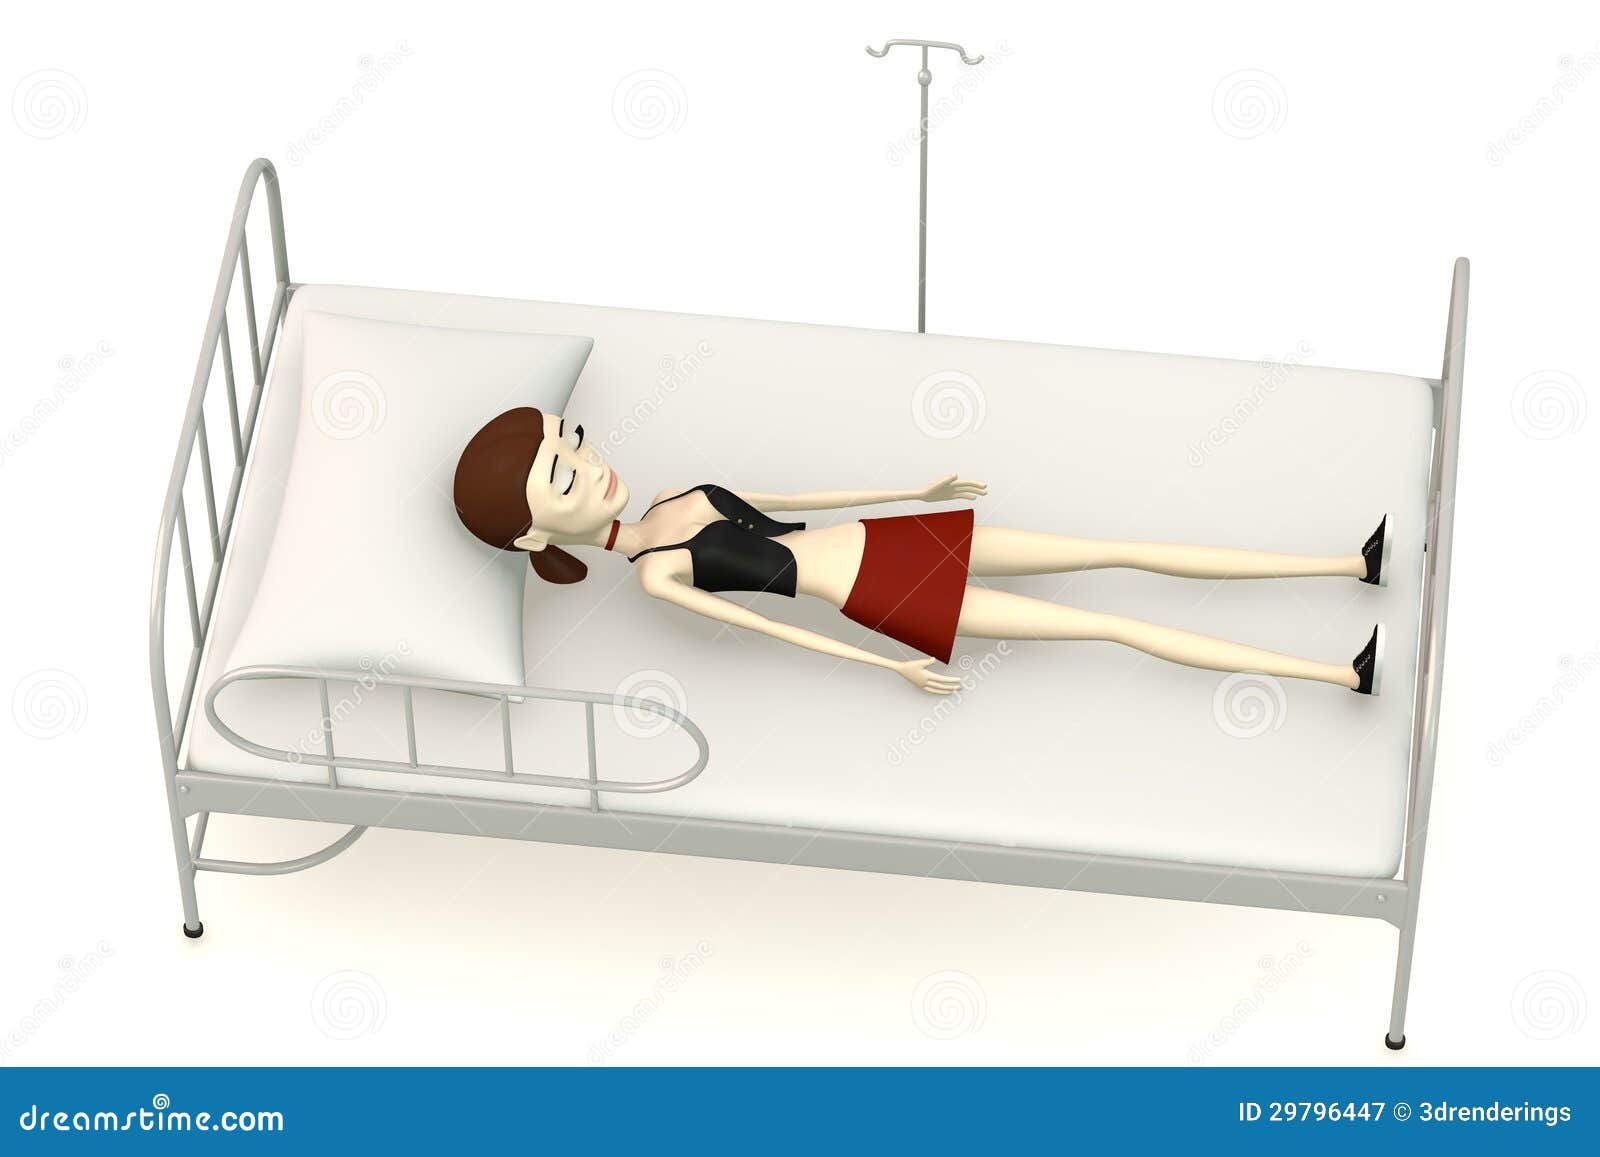 Cartoon Girl On Hospital Bed Royalty Free Stock Photography - Image ...